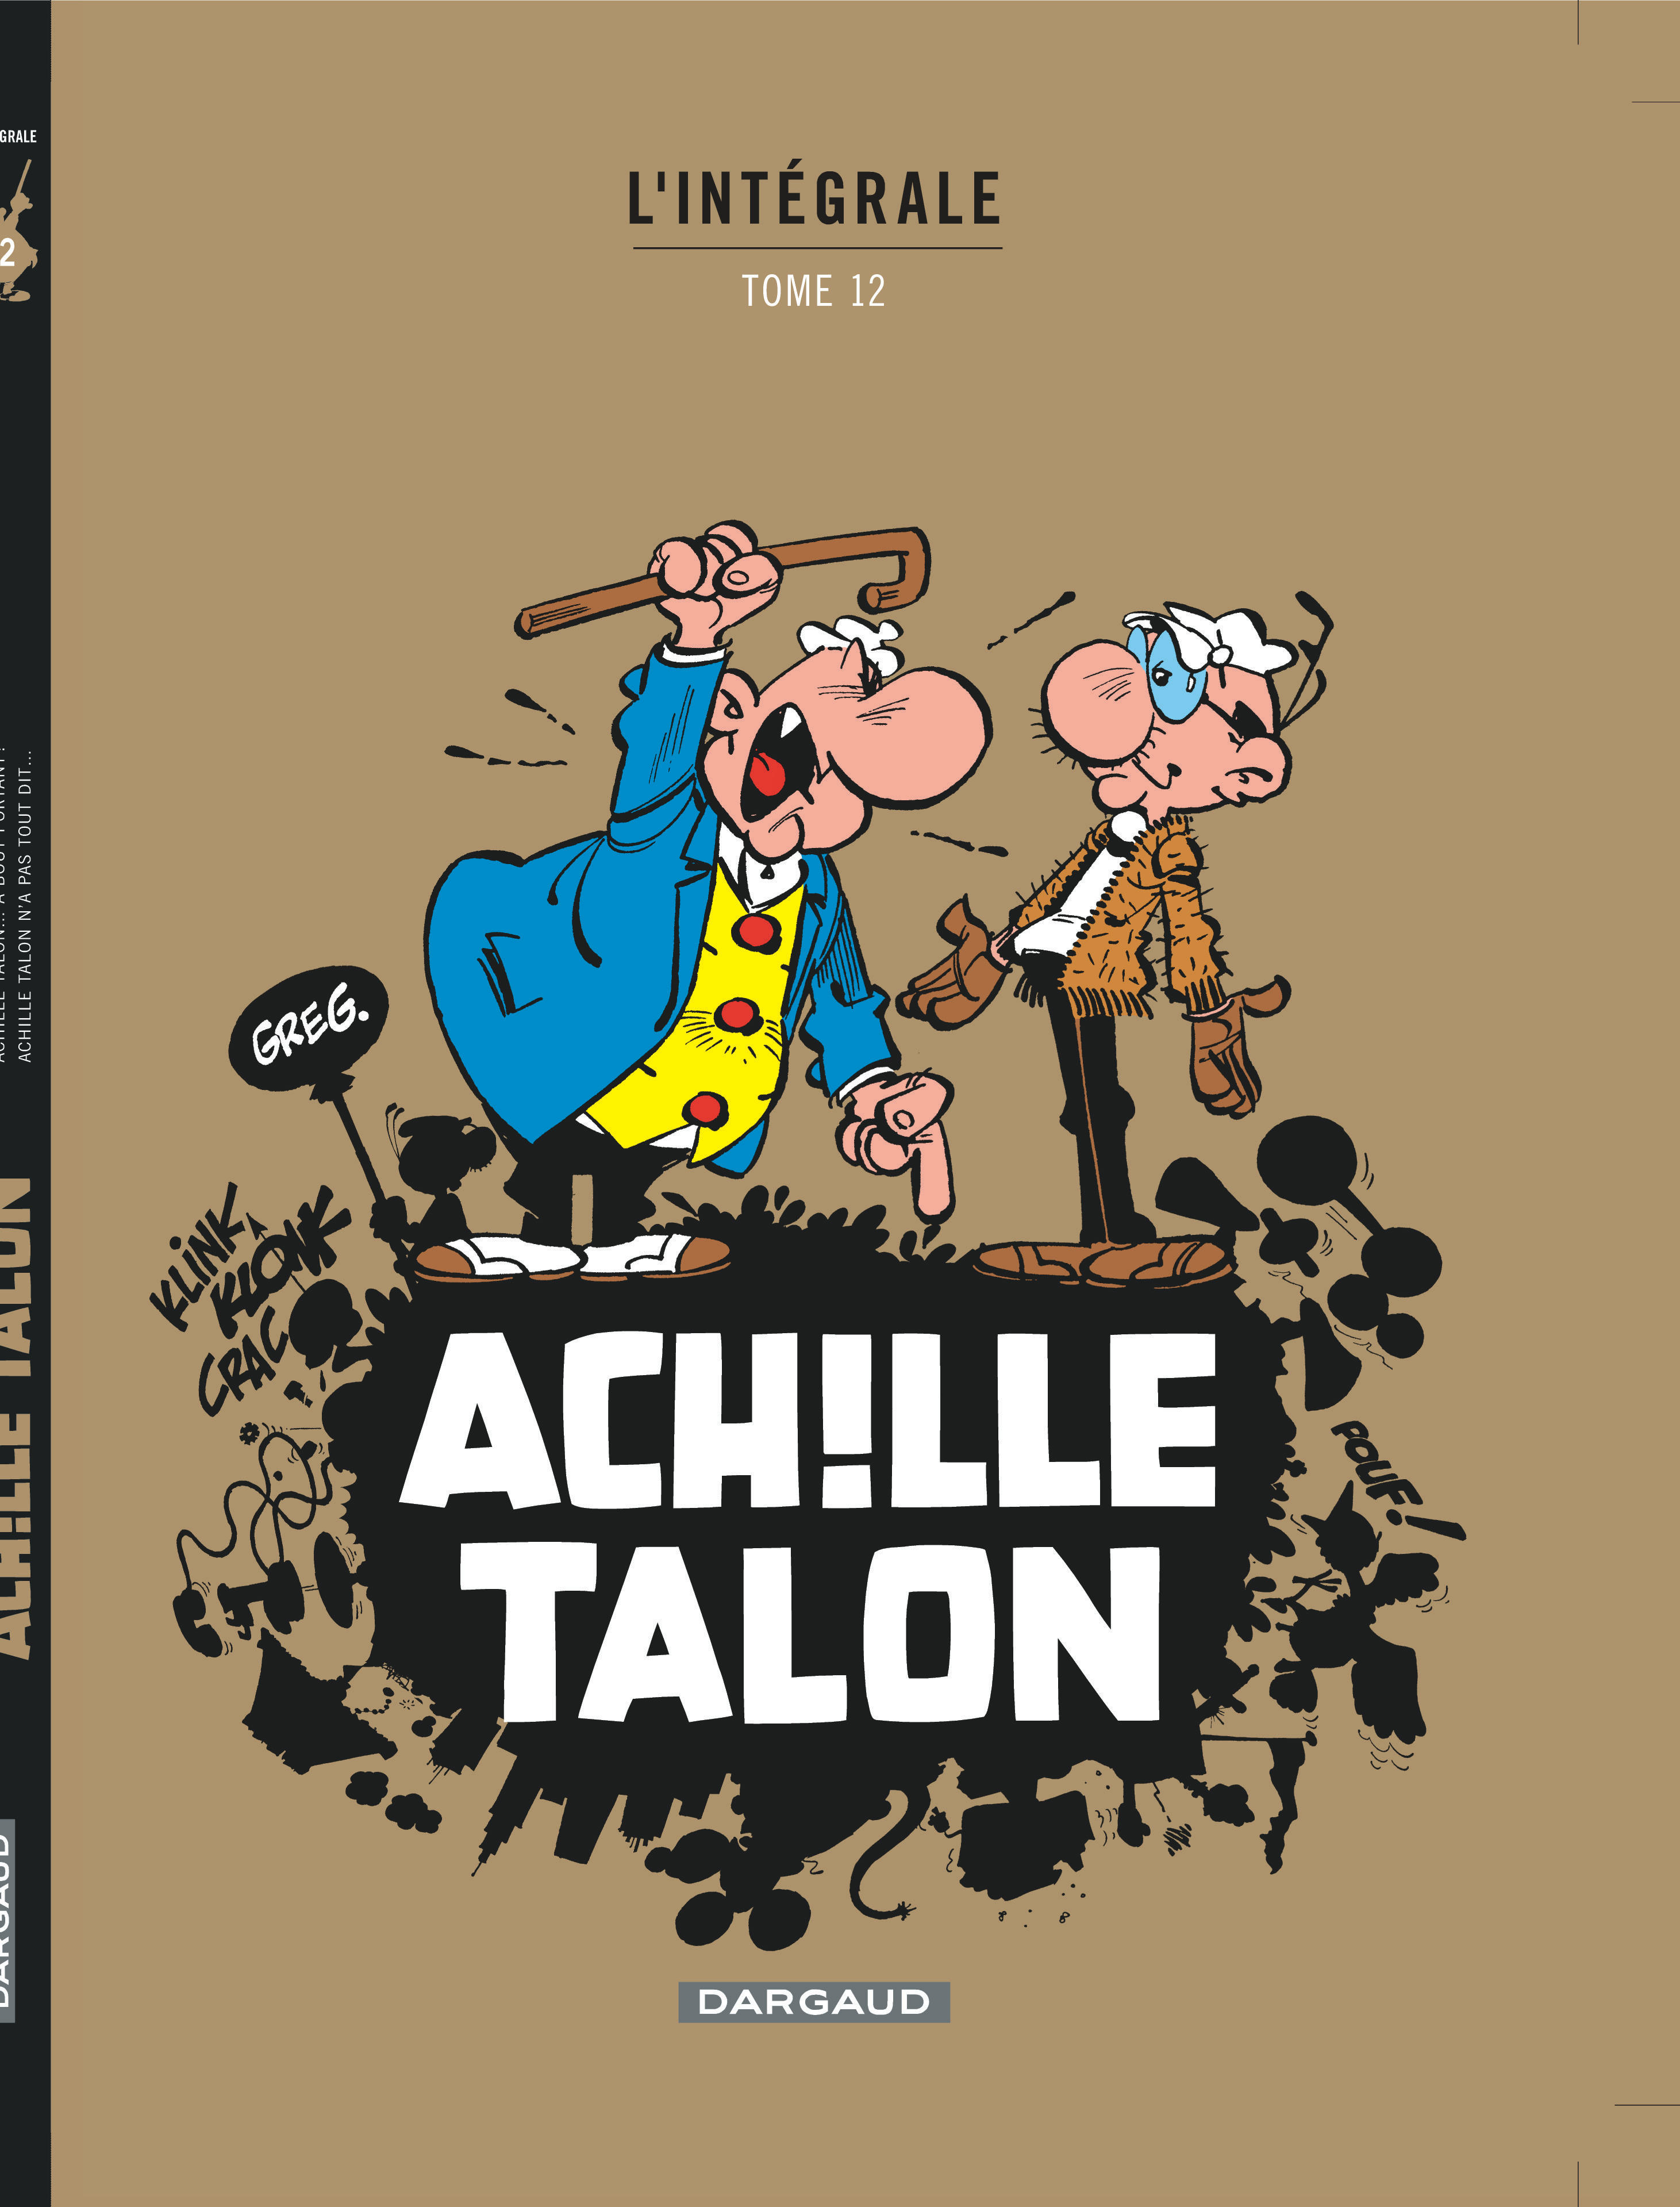 Achille Talon - Intégrales – Tome 12 – Mon Oeuvre à moi - tome 12 - couv